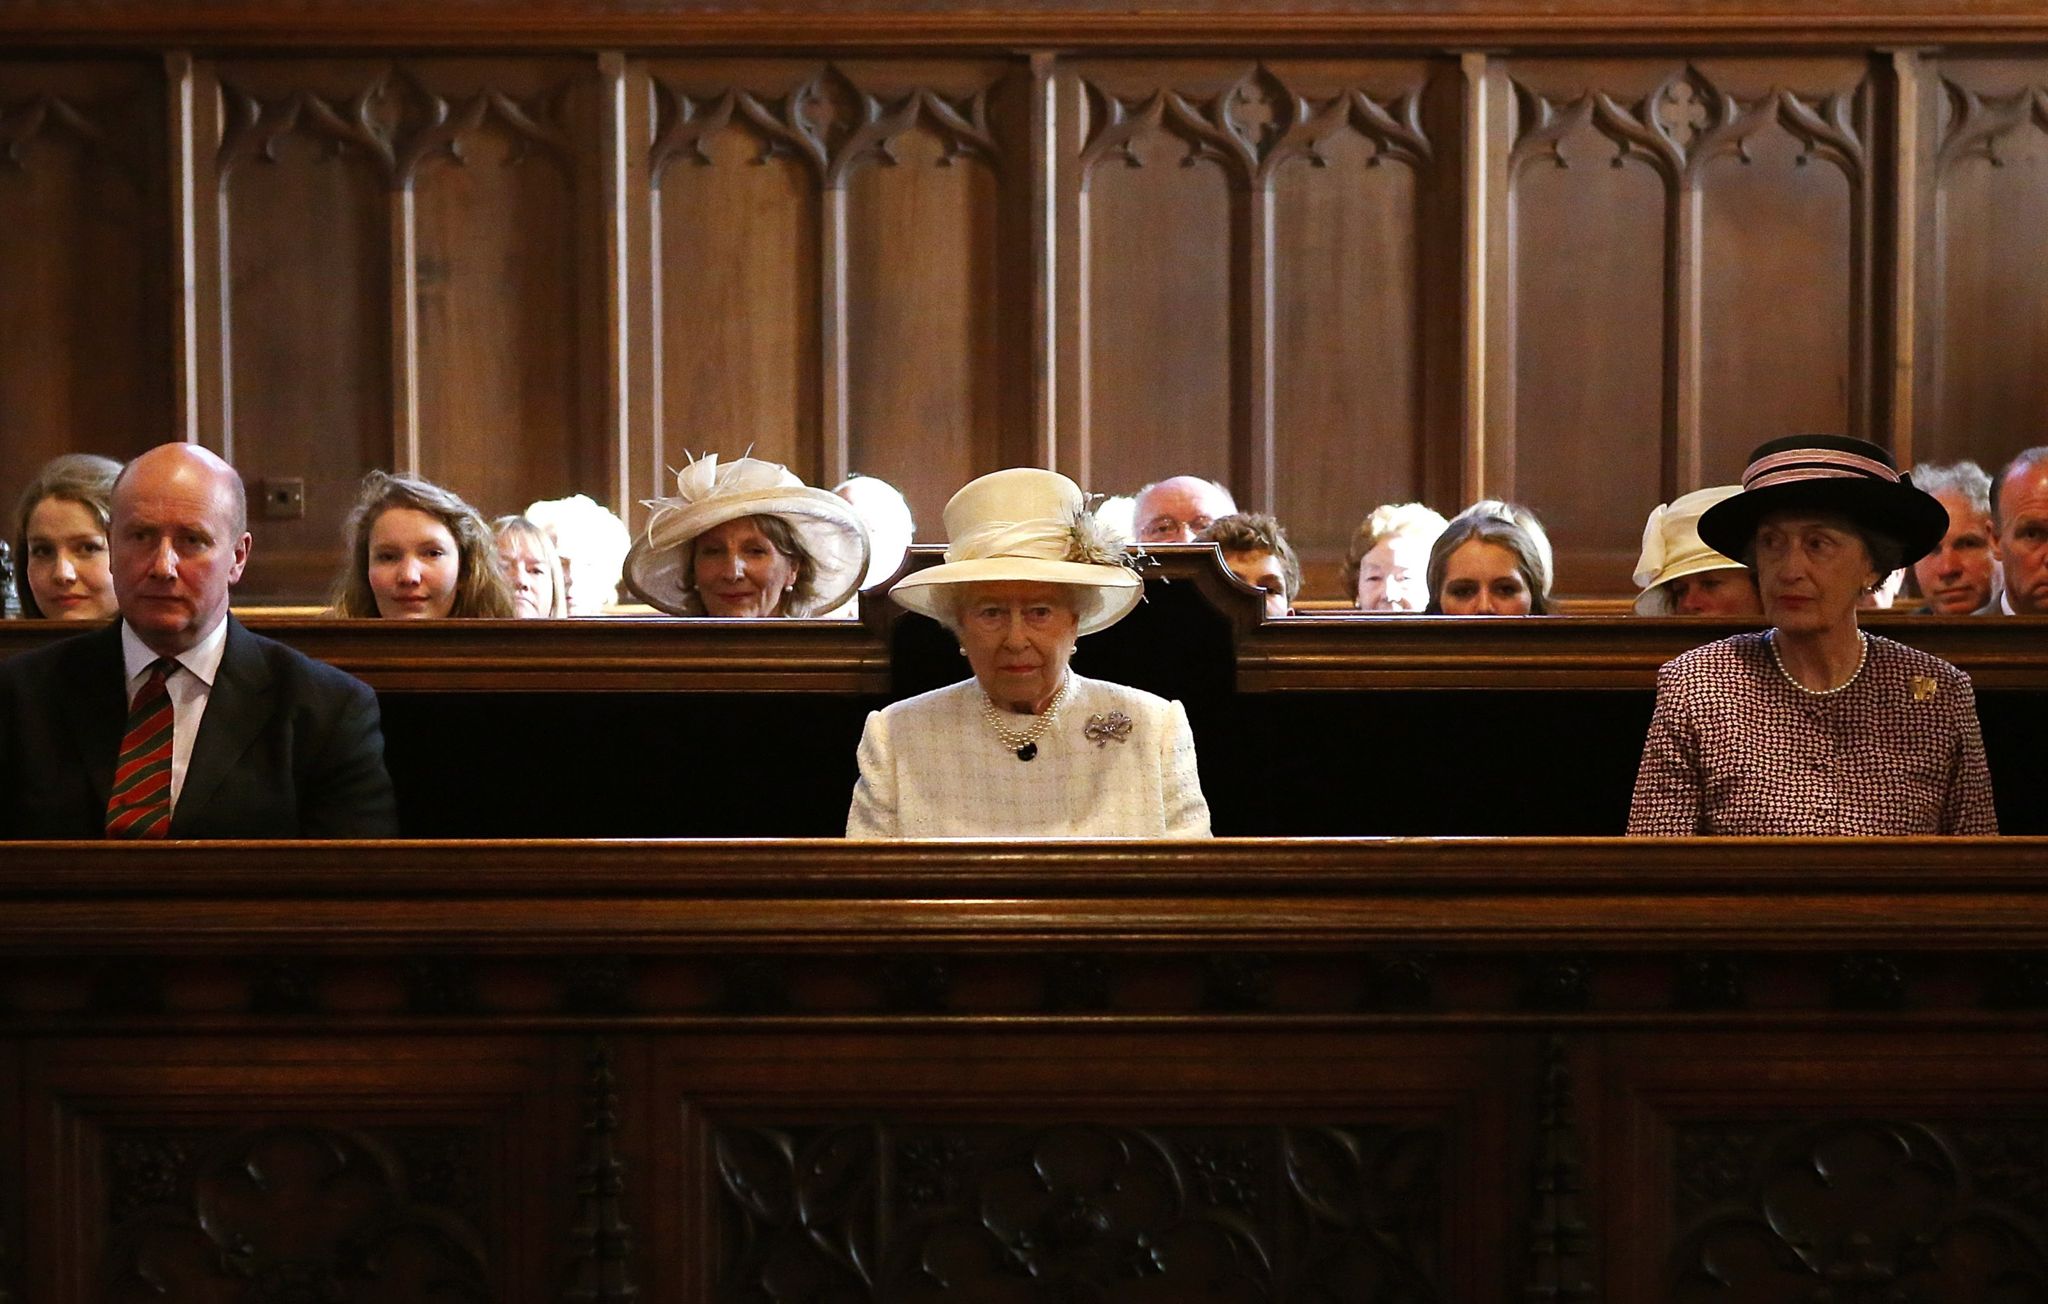 Queen Elizabeth at church service